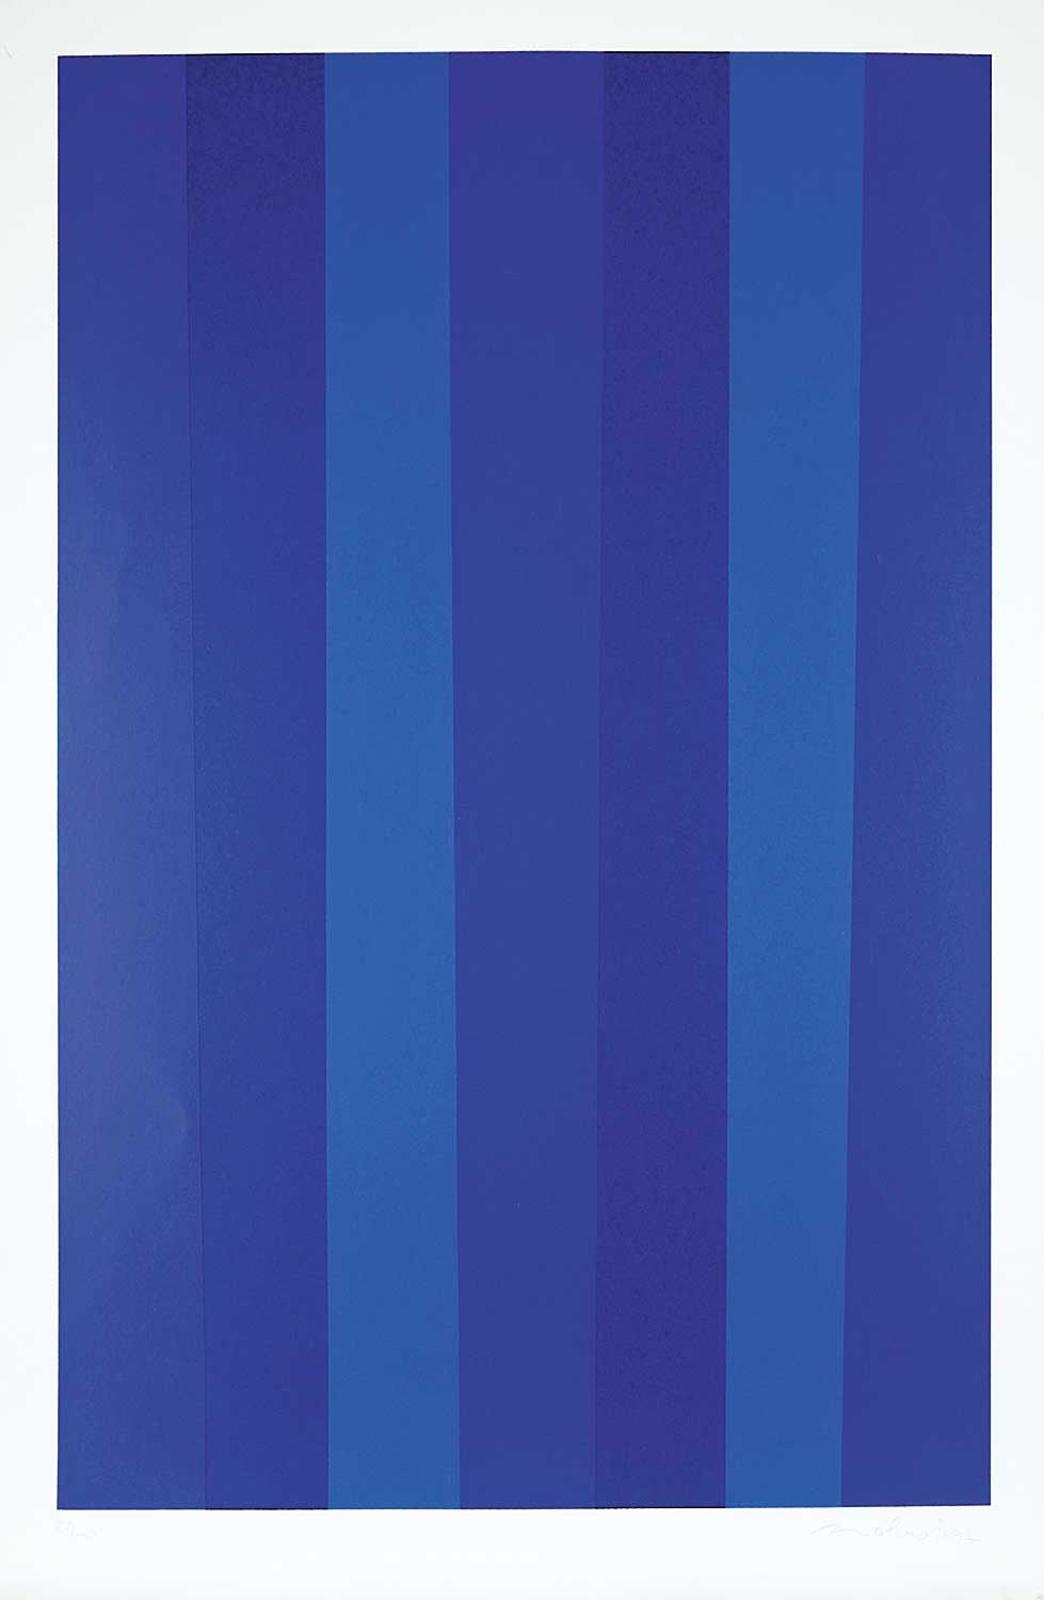 Guido Molinari (1933-2004) - Blue Quantifer  #27/40